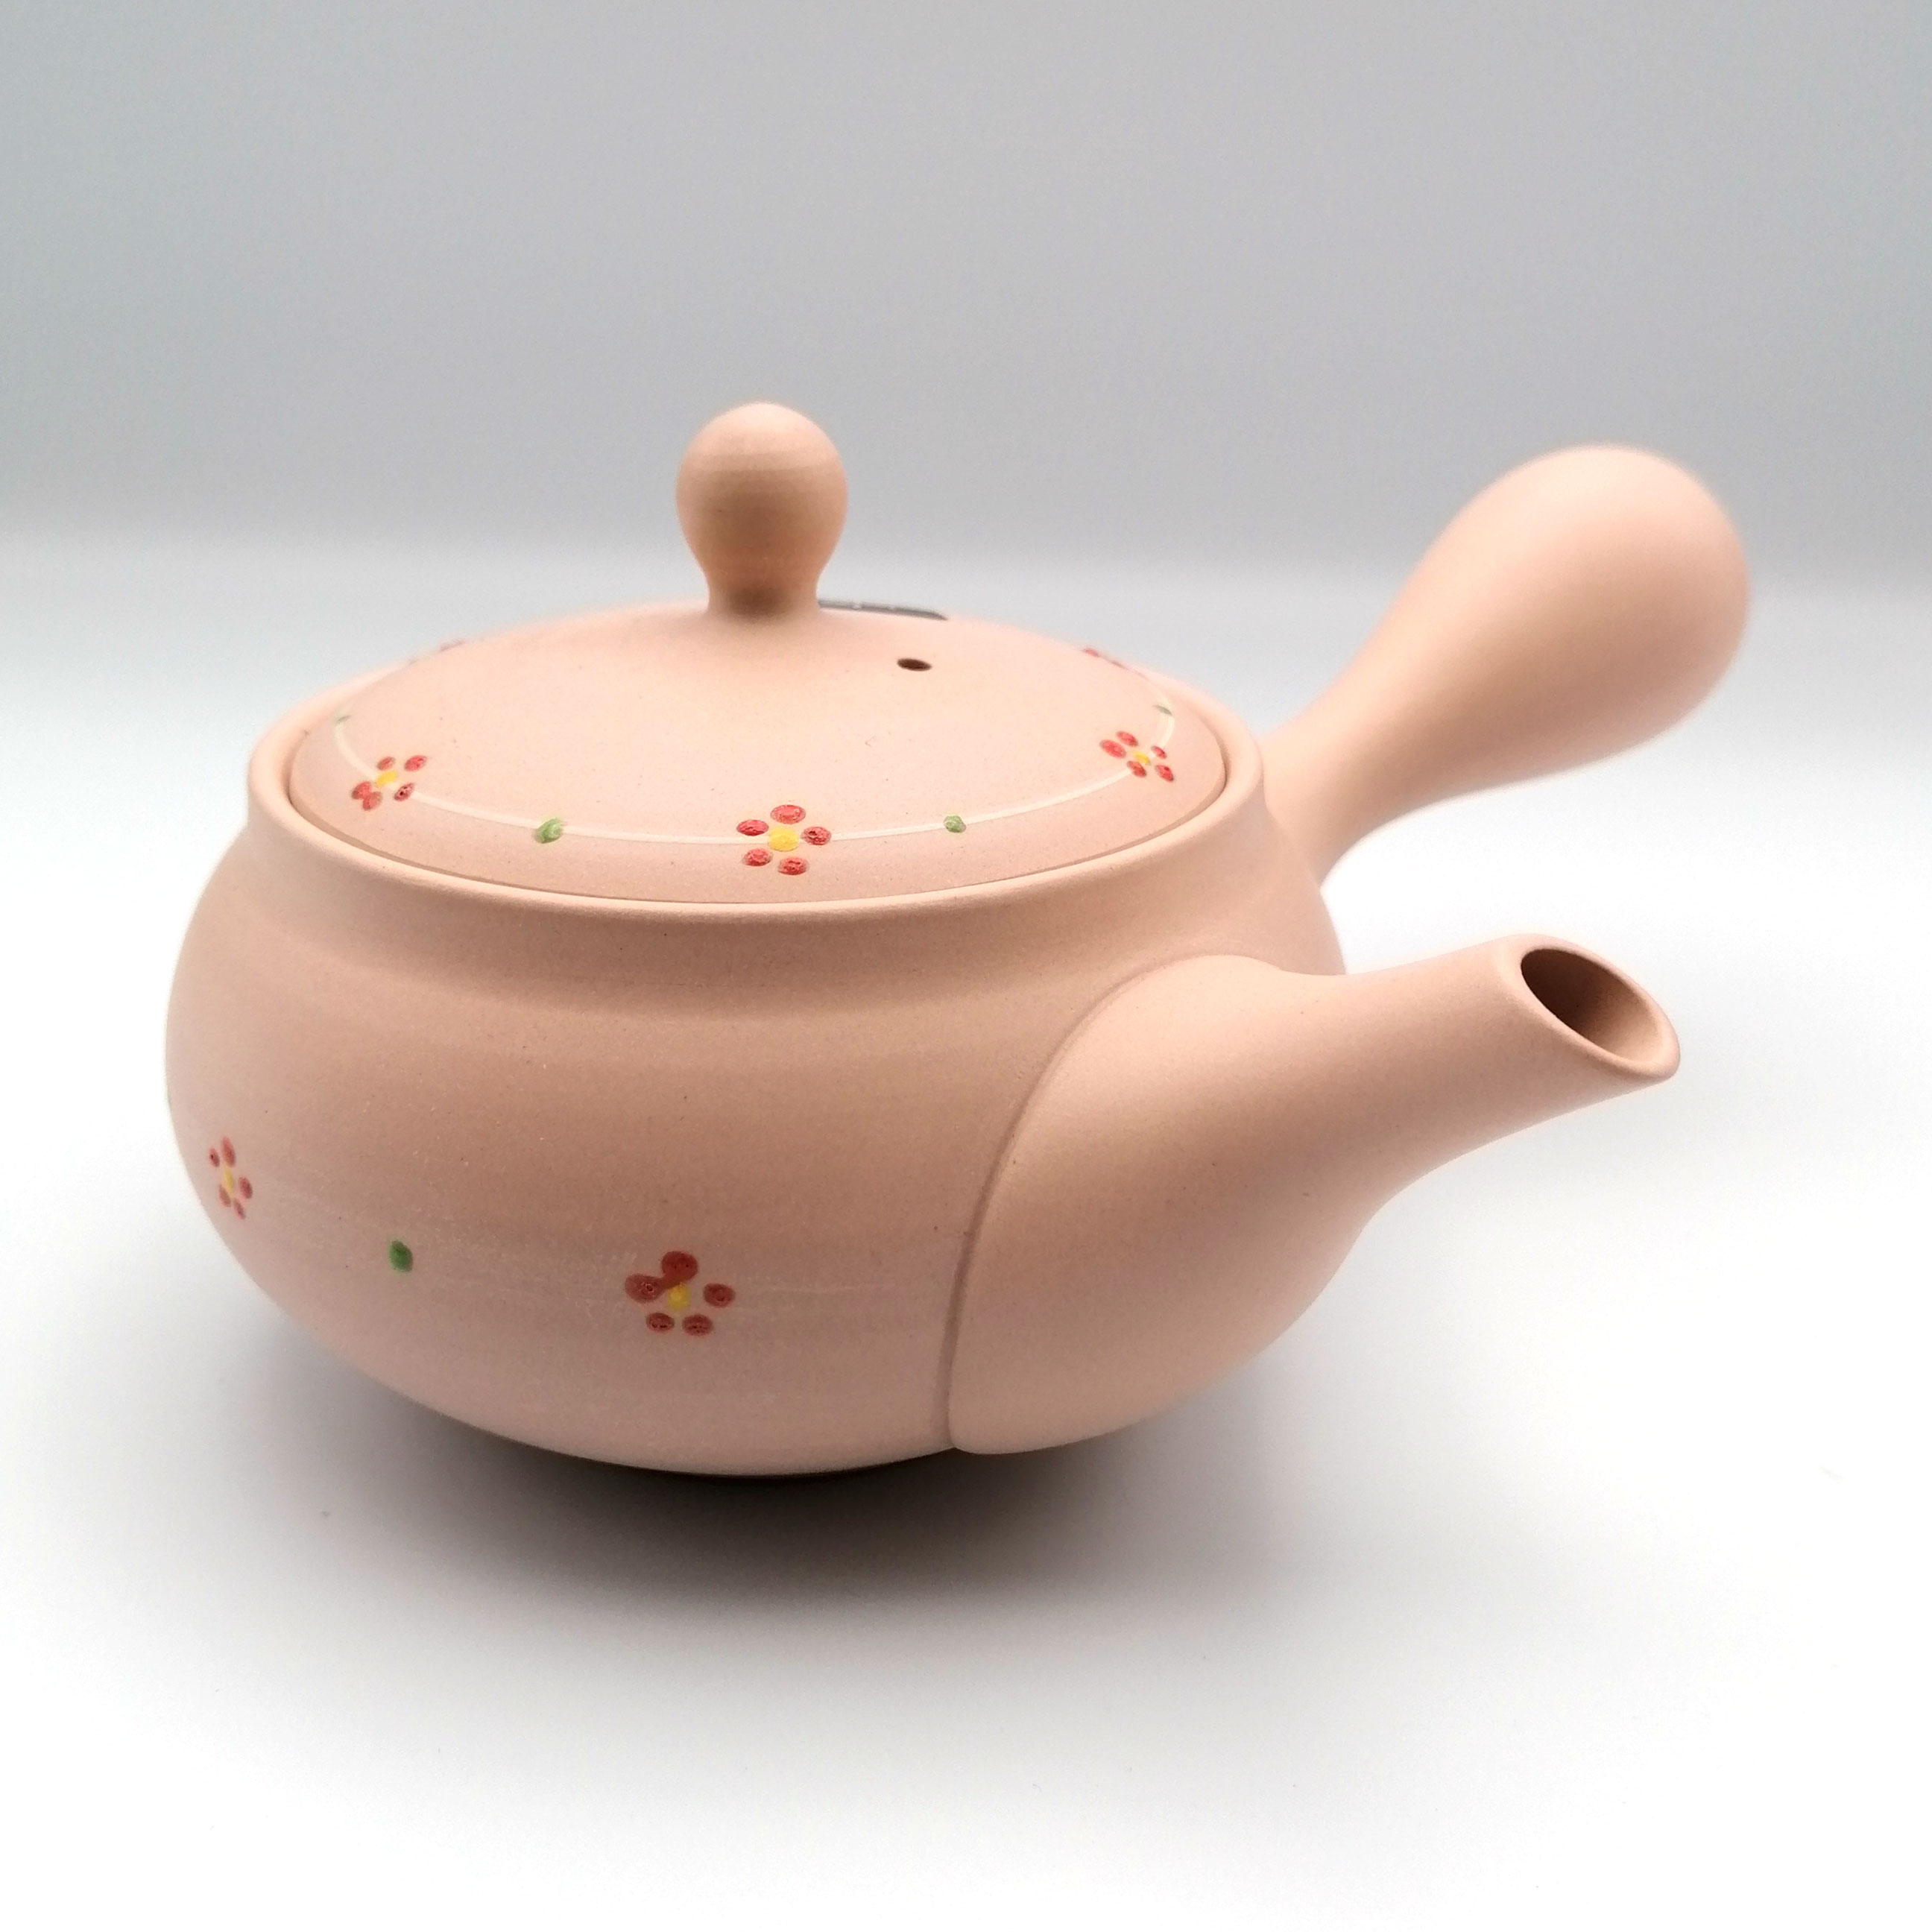 https://kyotoboutique.fr/25612/japanese-teapot-tokoname-kyusu-pinku-pink-and-small-flowers.jpg